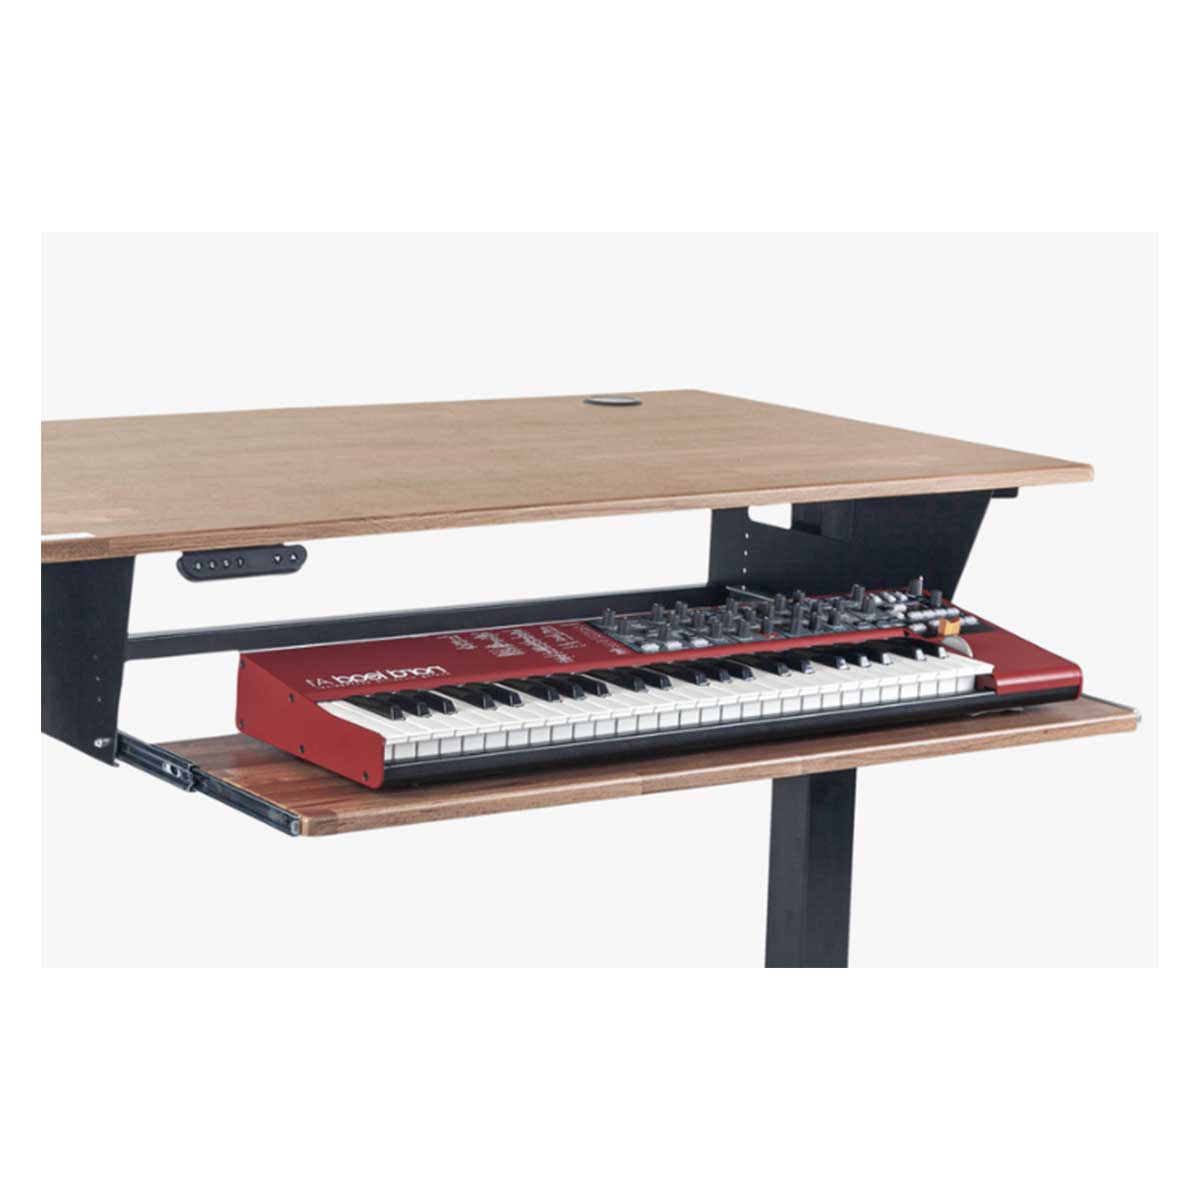 Wavebone Horizon Pull-Out Keyboard Tray for Midi Keyboard Controllers